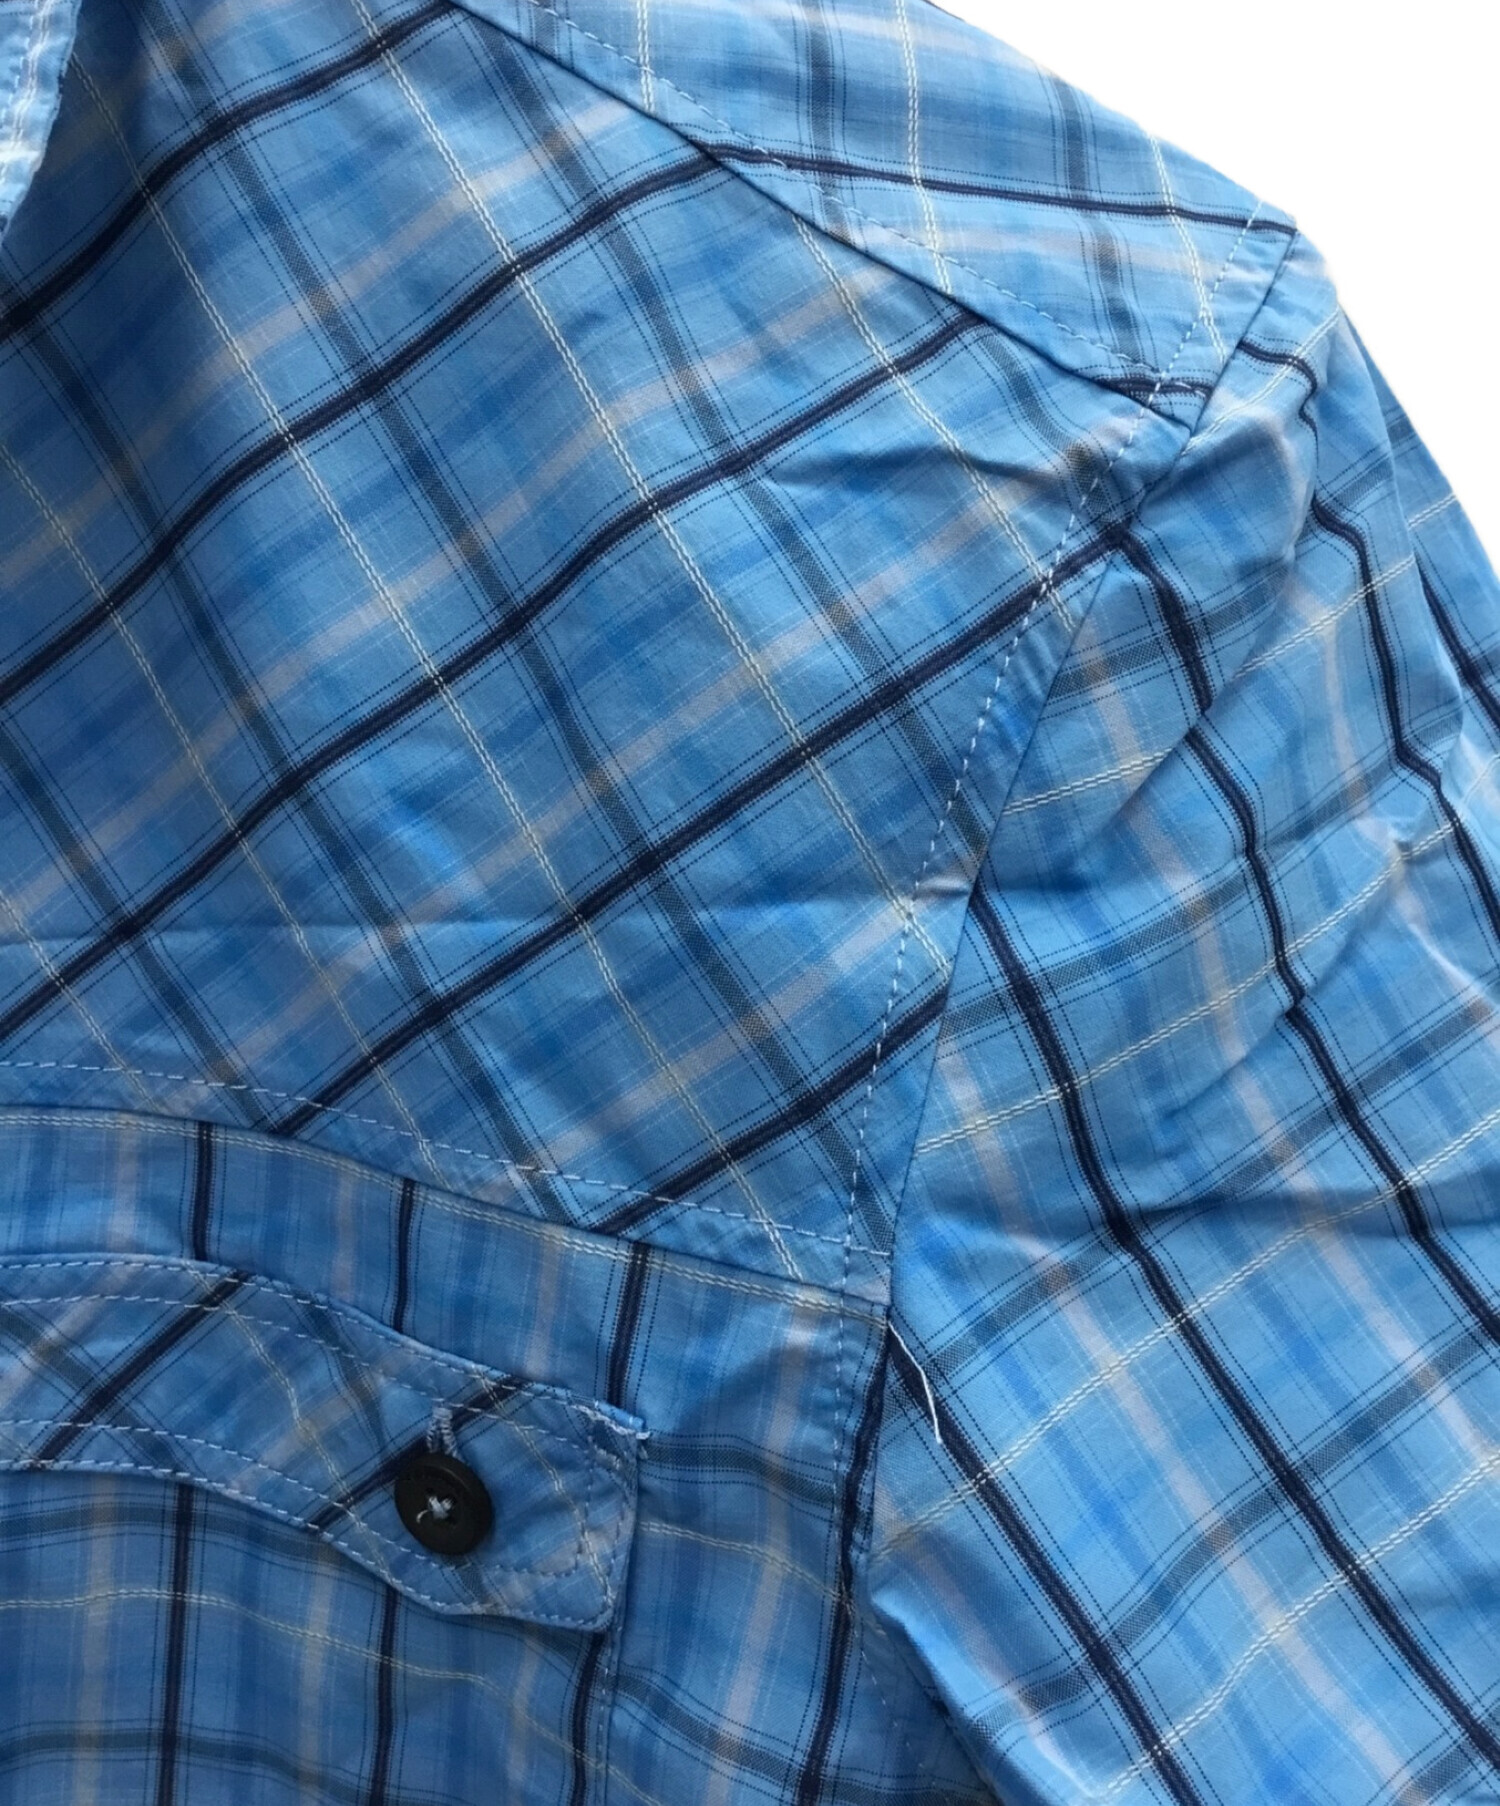 MAMMUT (マムート) 半袖シャツ ブルー サイズ:M